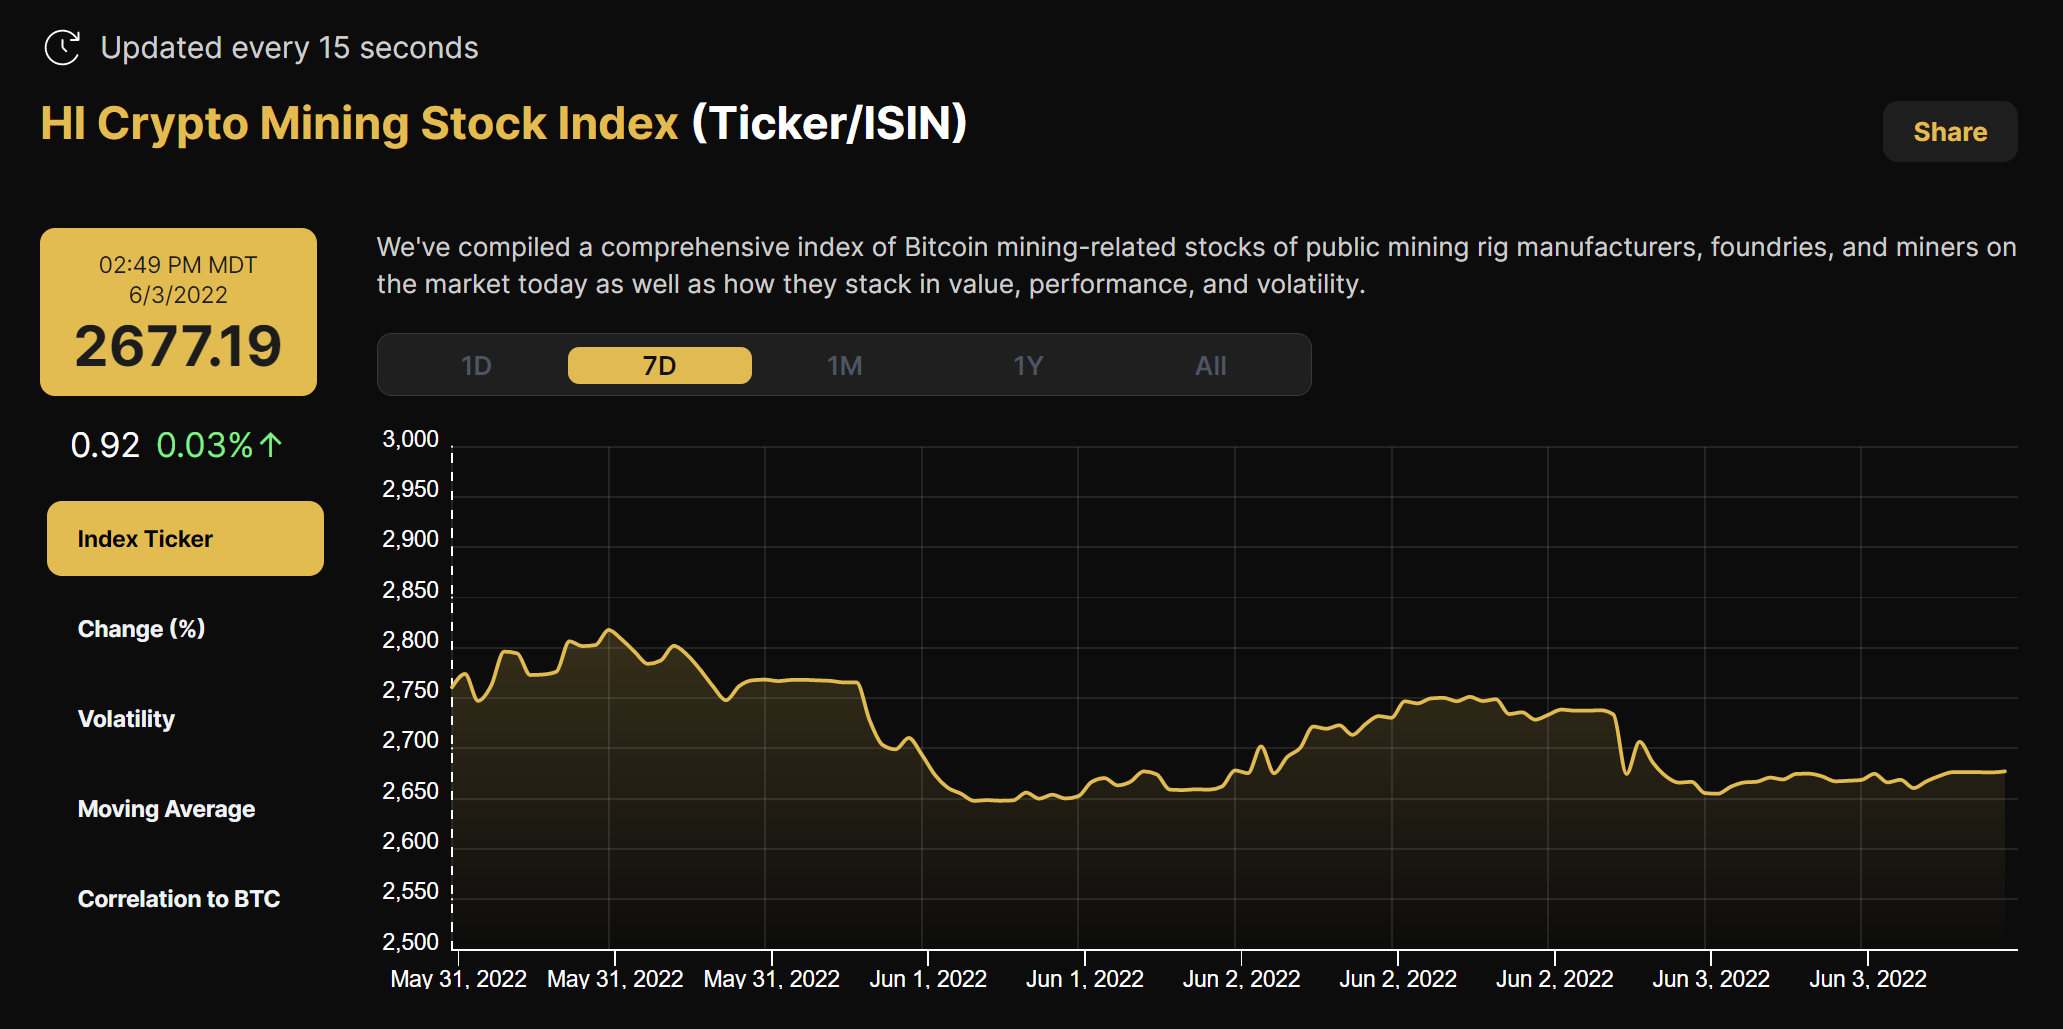 Hashrate Index Crypto Mining Stock Index (May 31 - June 3, 2022)